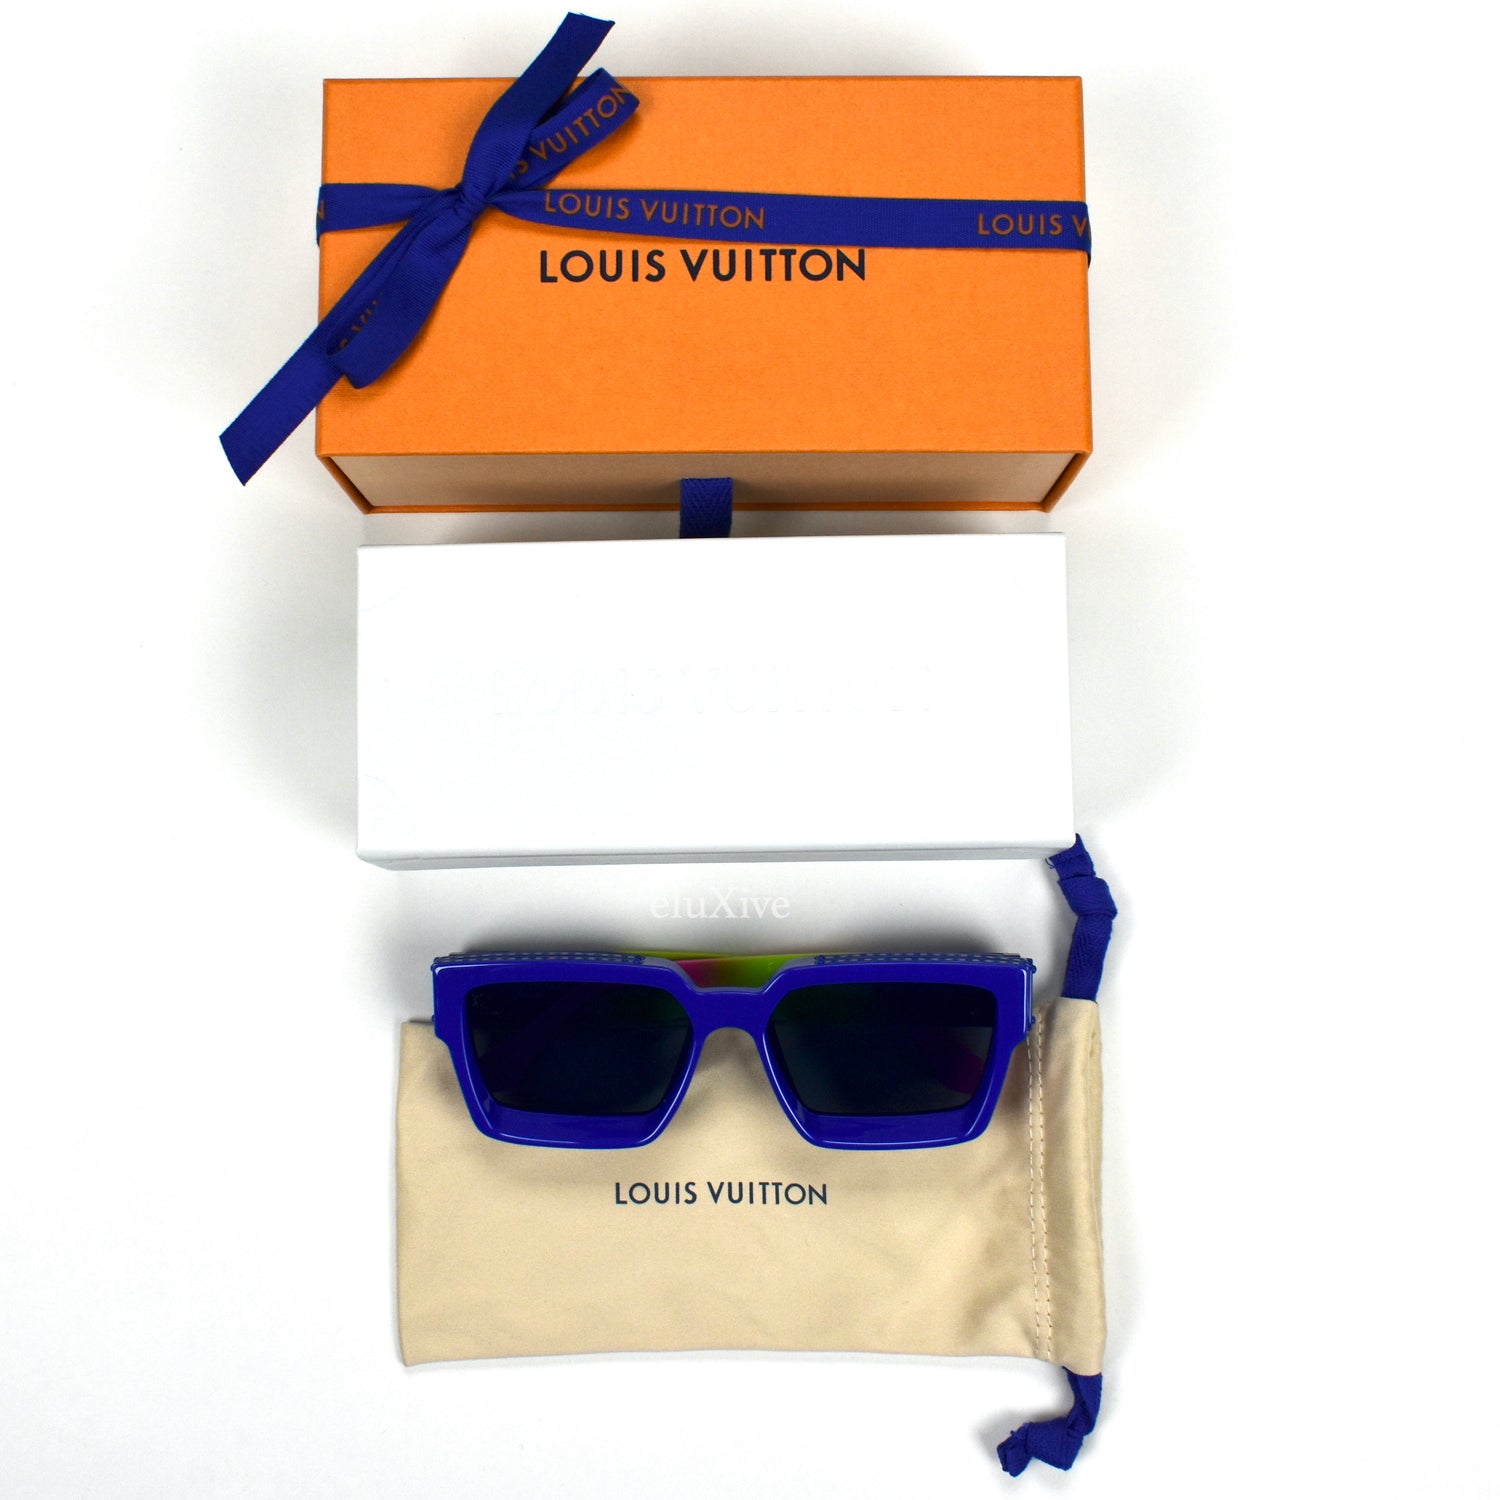 Louis Vuitton - 1.1 Millionaires Sunglasses Illusion Gradient – eluXive